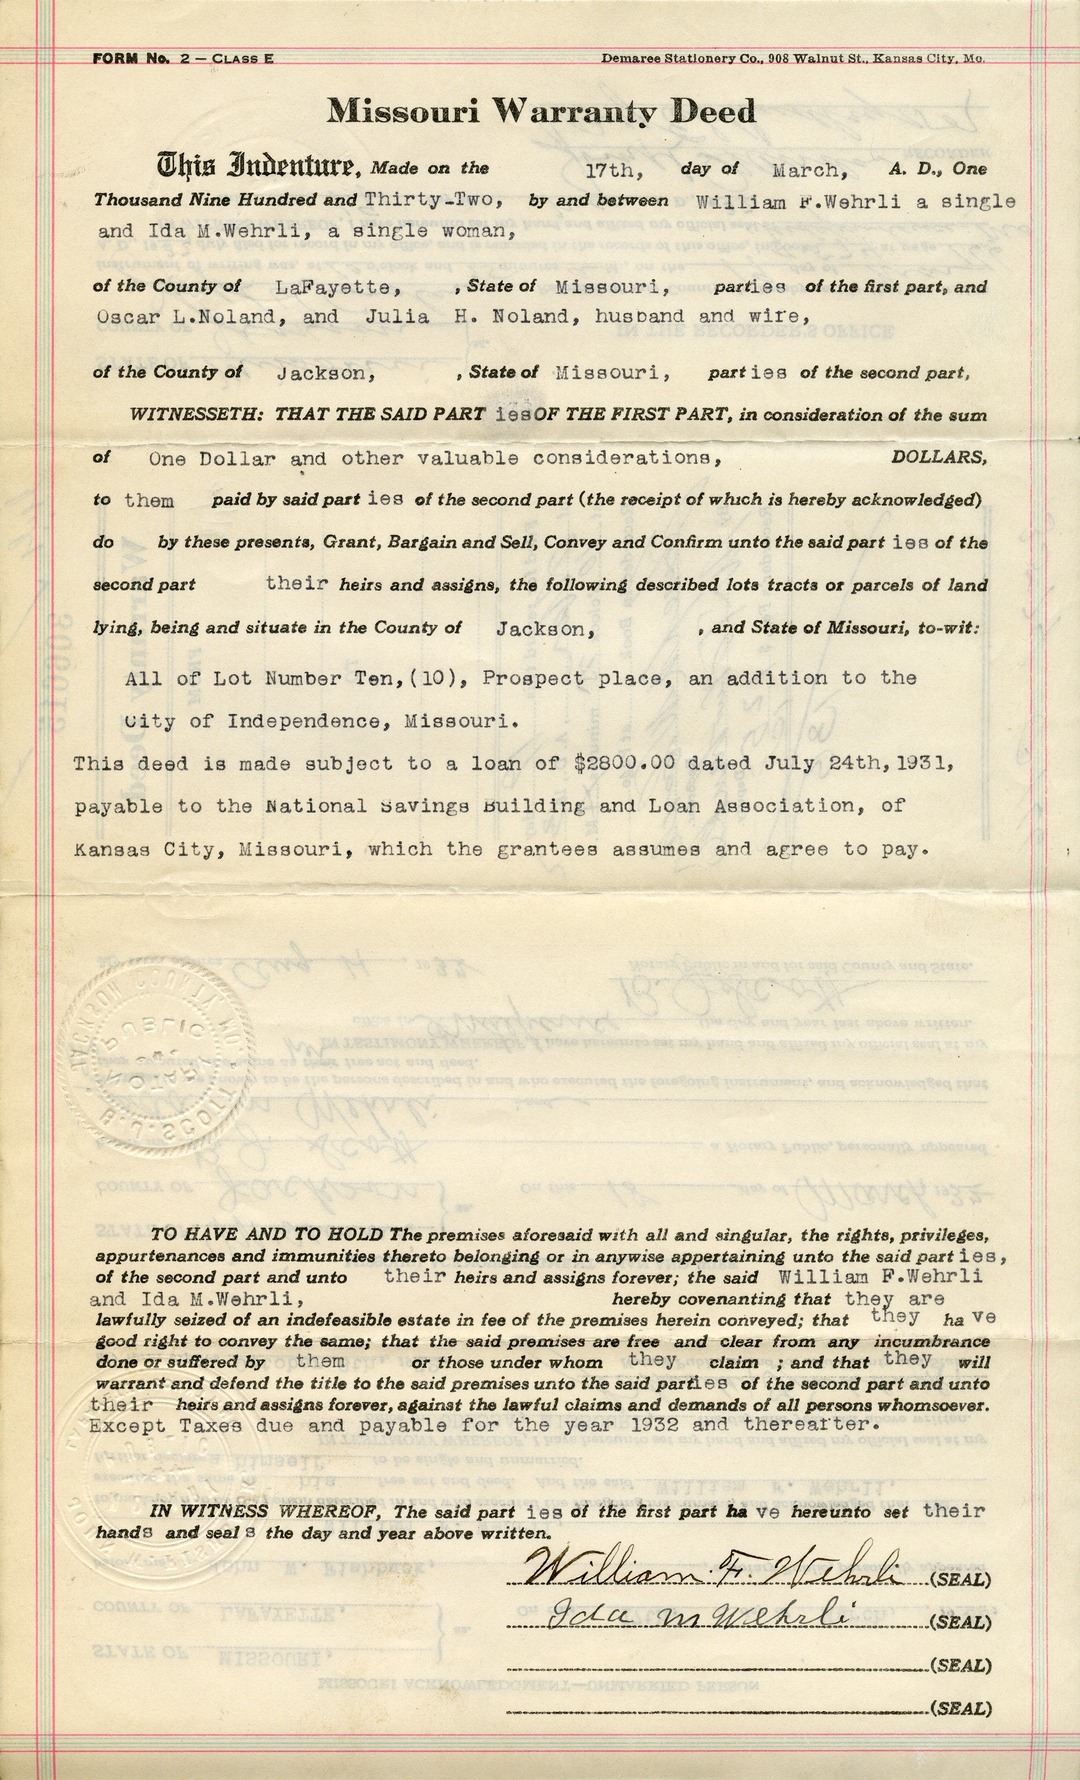 Warranty Deed from William F. Wehrli and Ida M. Wehrli to Oscar L. Noland and Julia H. Noland